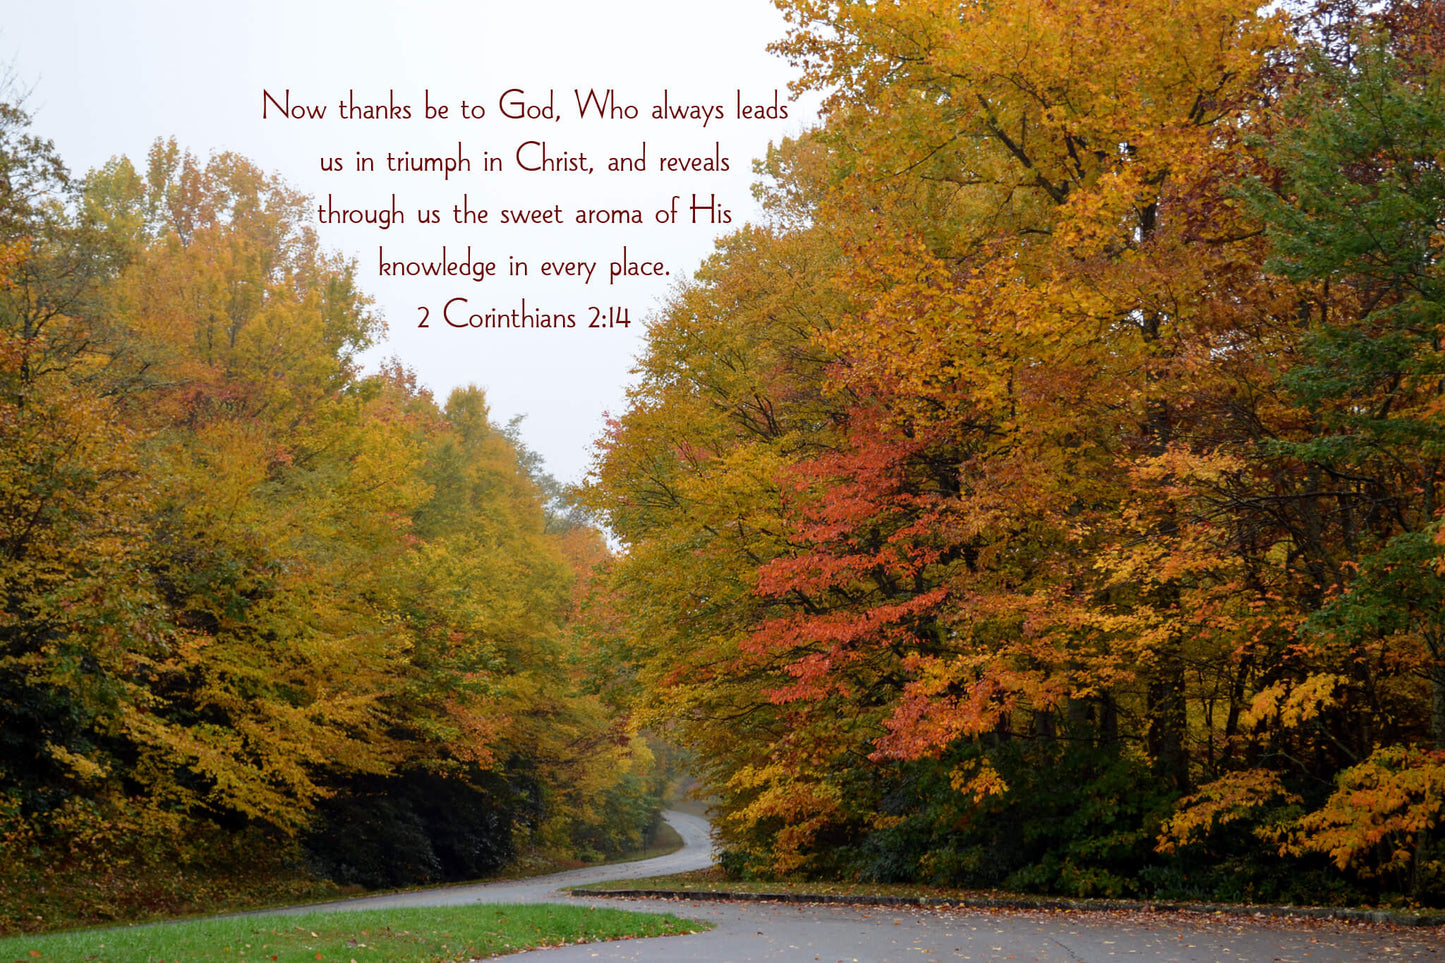 2 Corinthians 2:14 Christian greeting card